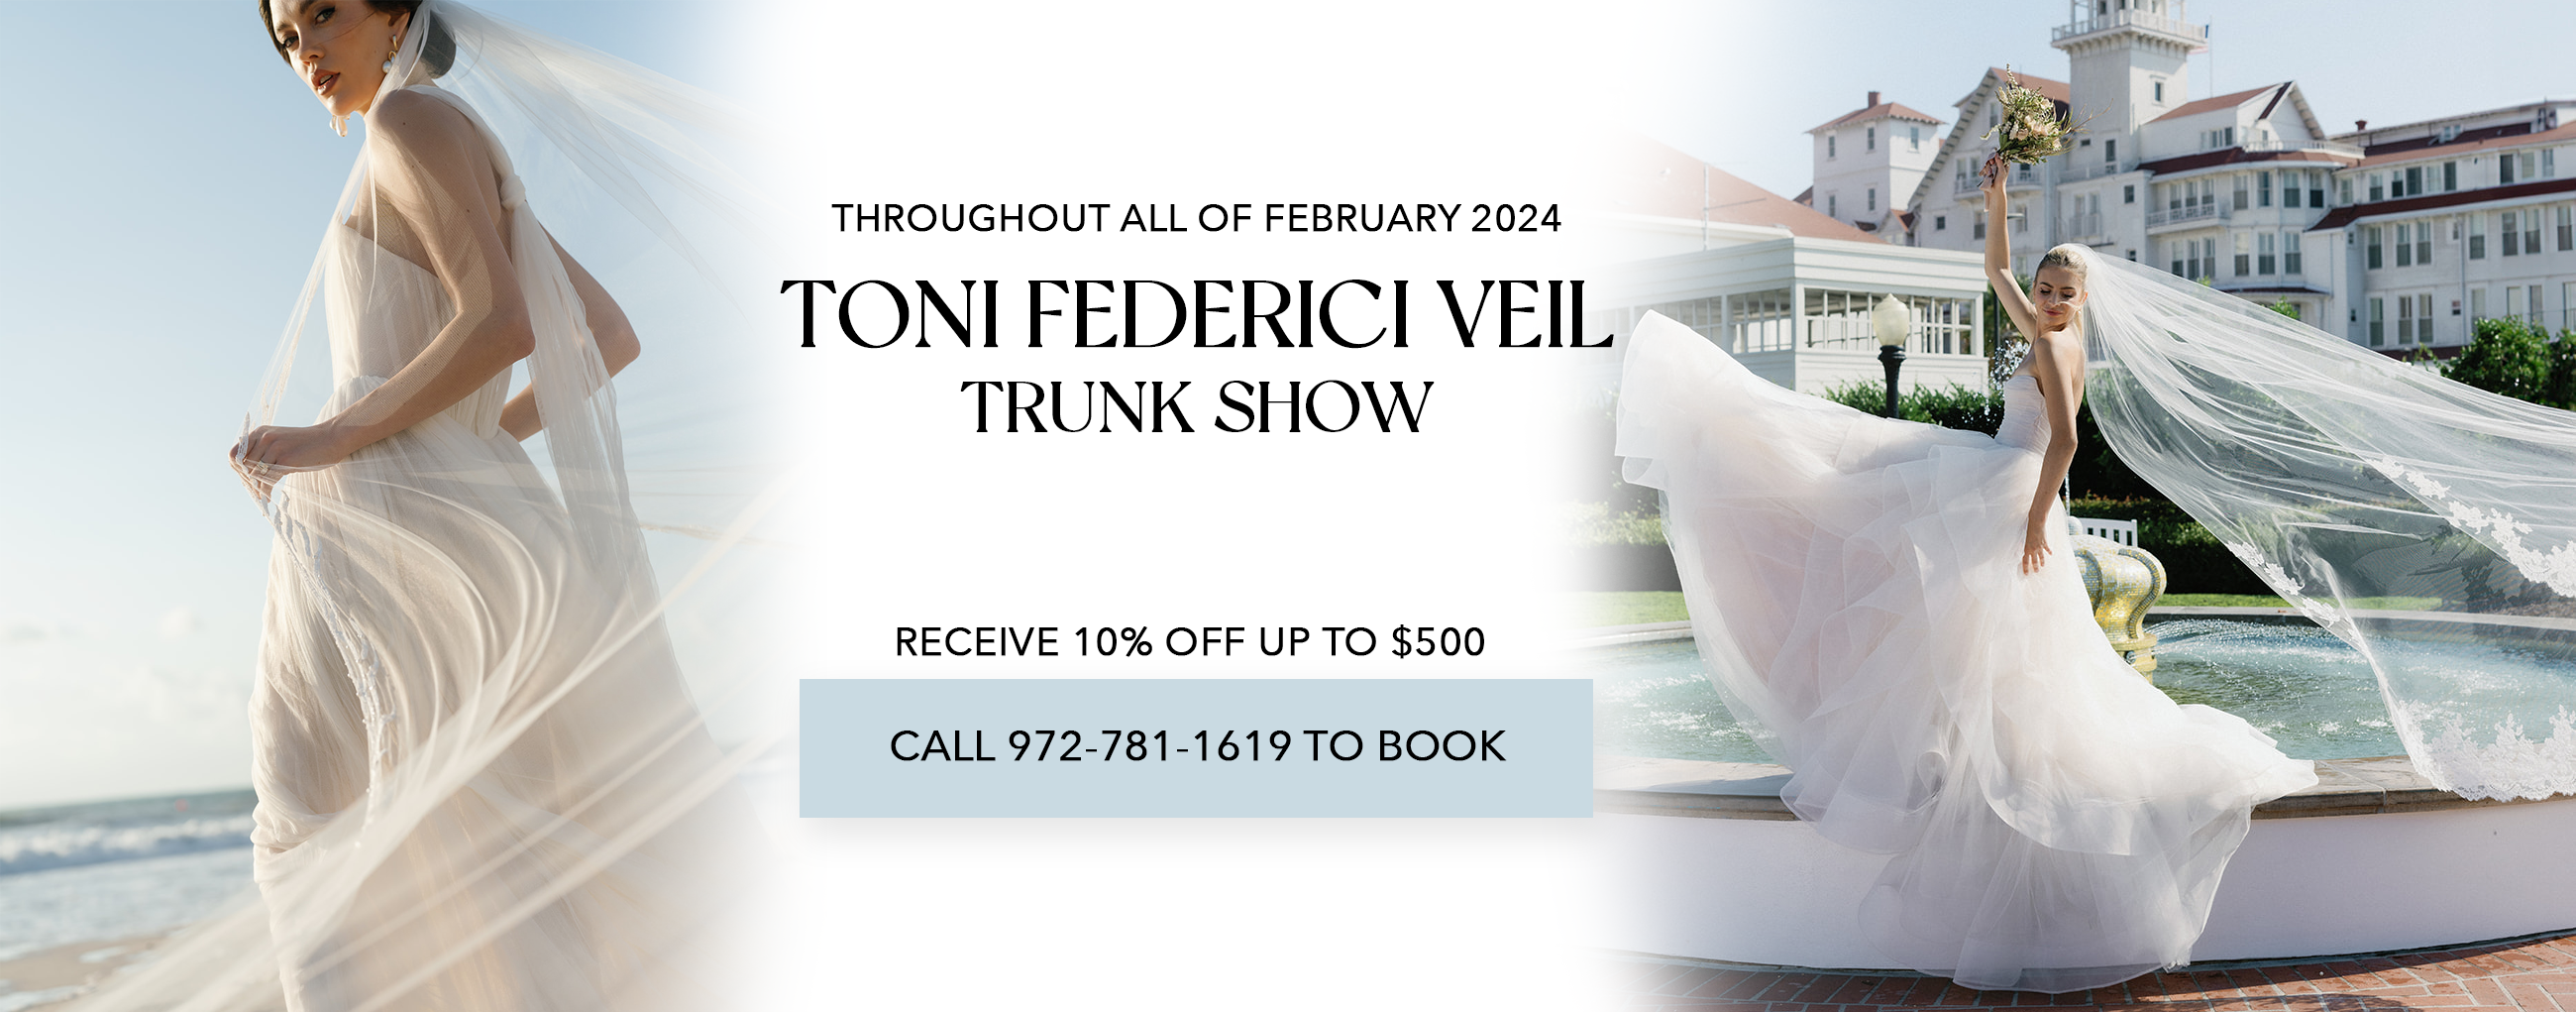 Toni Federici Veil Trunk Show - ALL OF FEBRUARY 2024